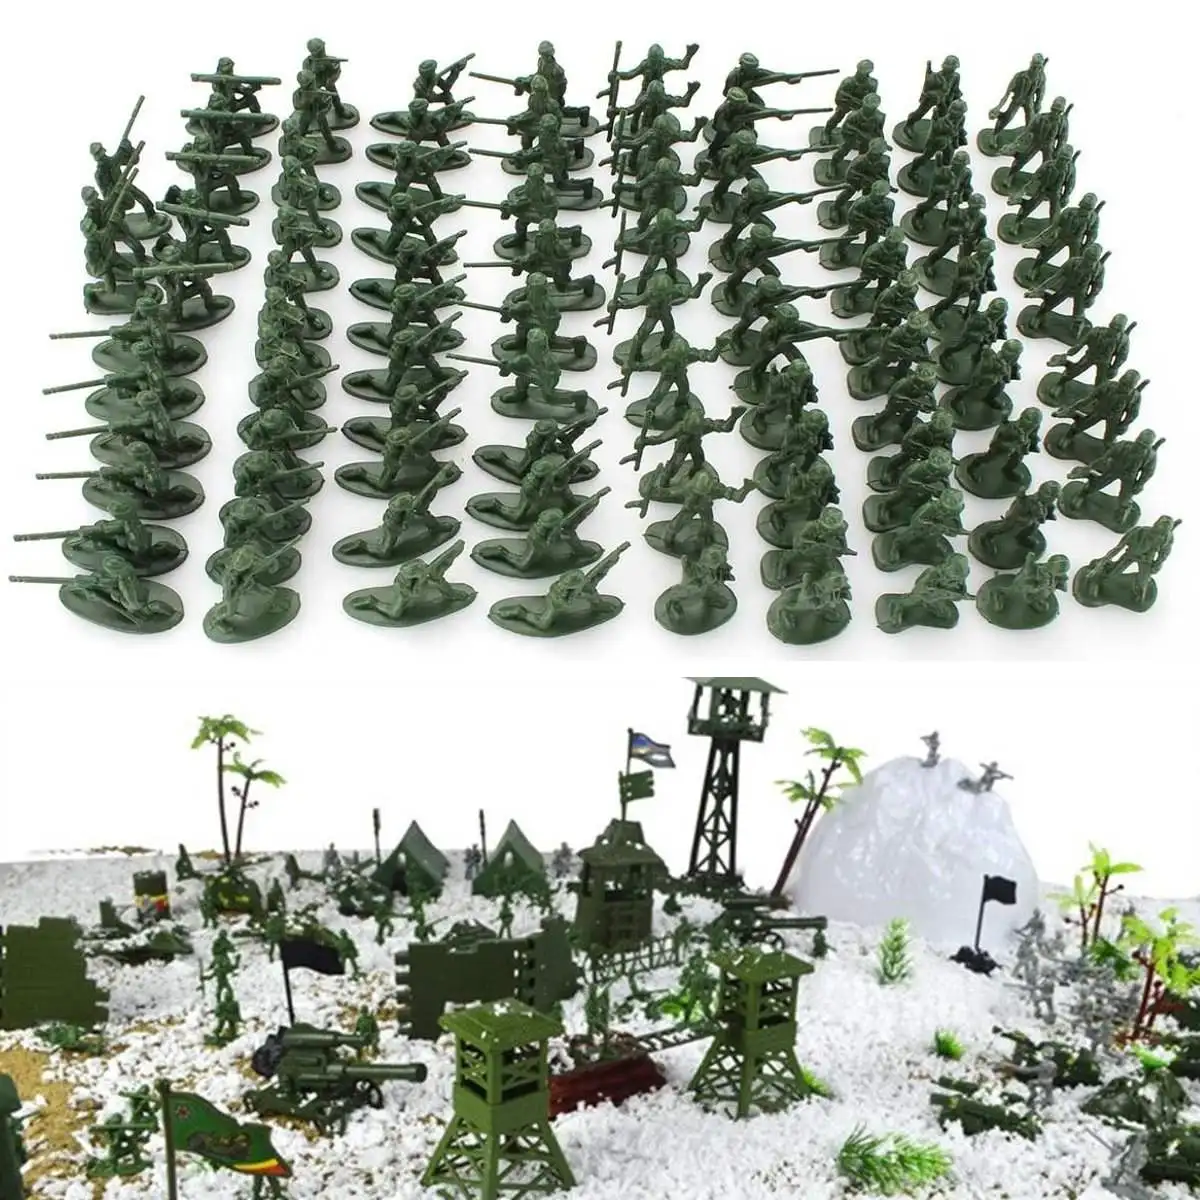 100pcs/set Military Plastic Toy s Army Men Figures 12 Poses Gift Model Action Figure Toys For Children Boys - купить по выгодной